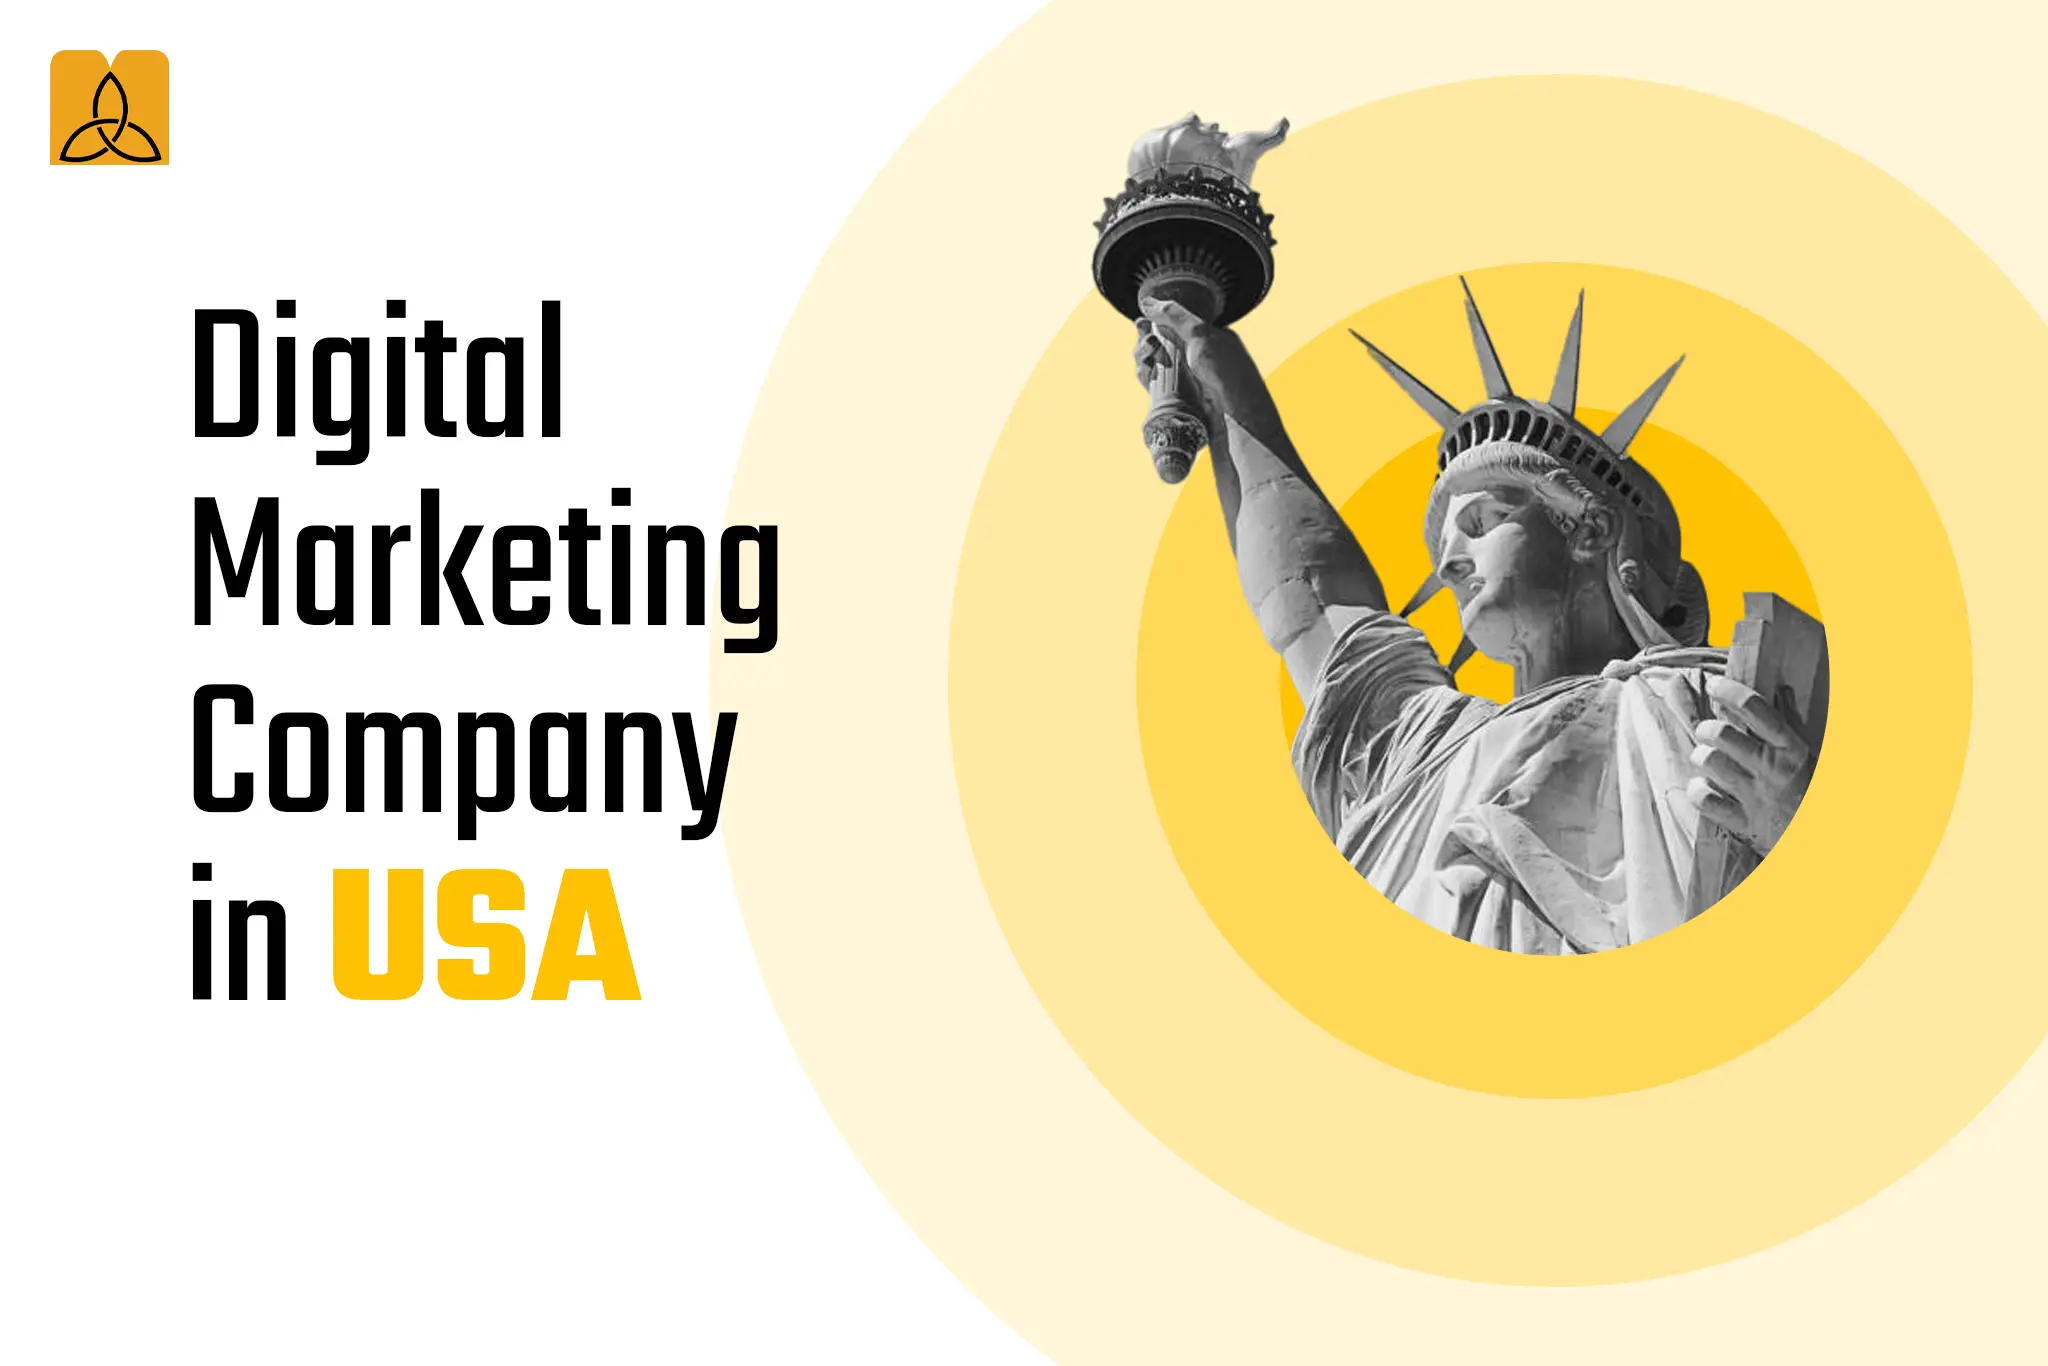 Digital marketing company in USA